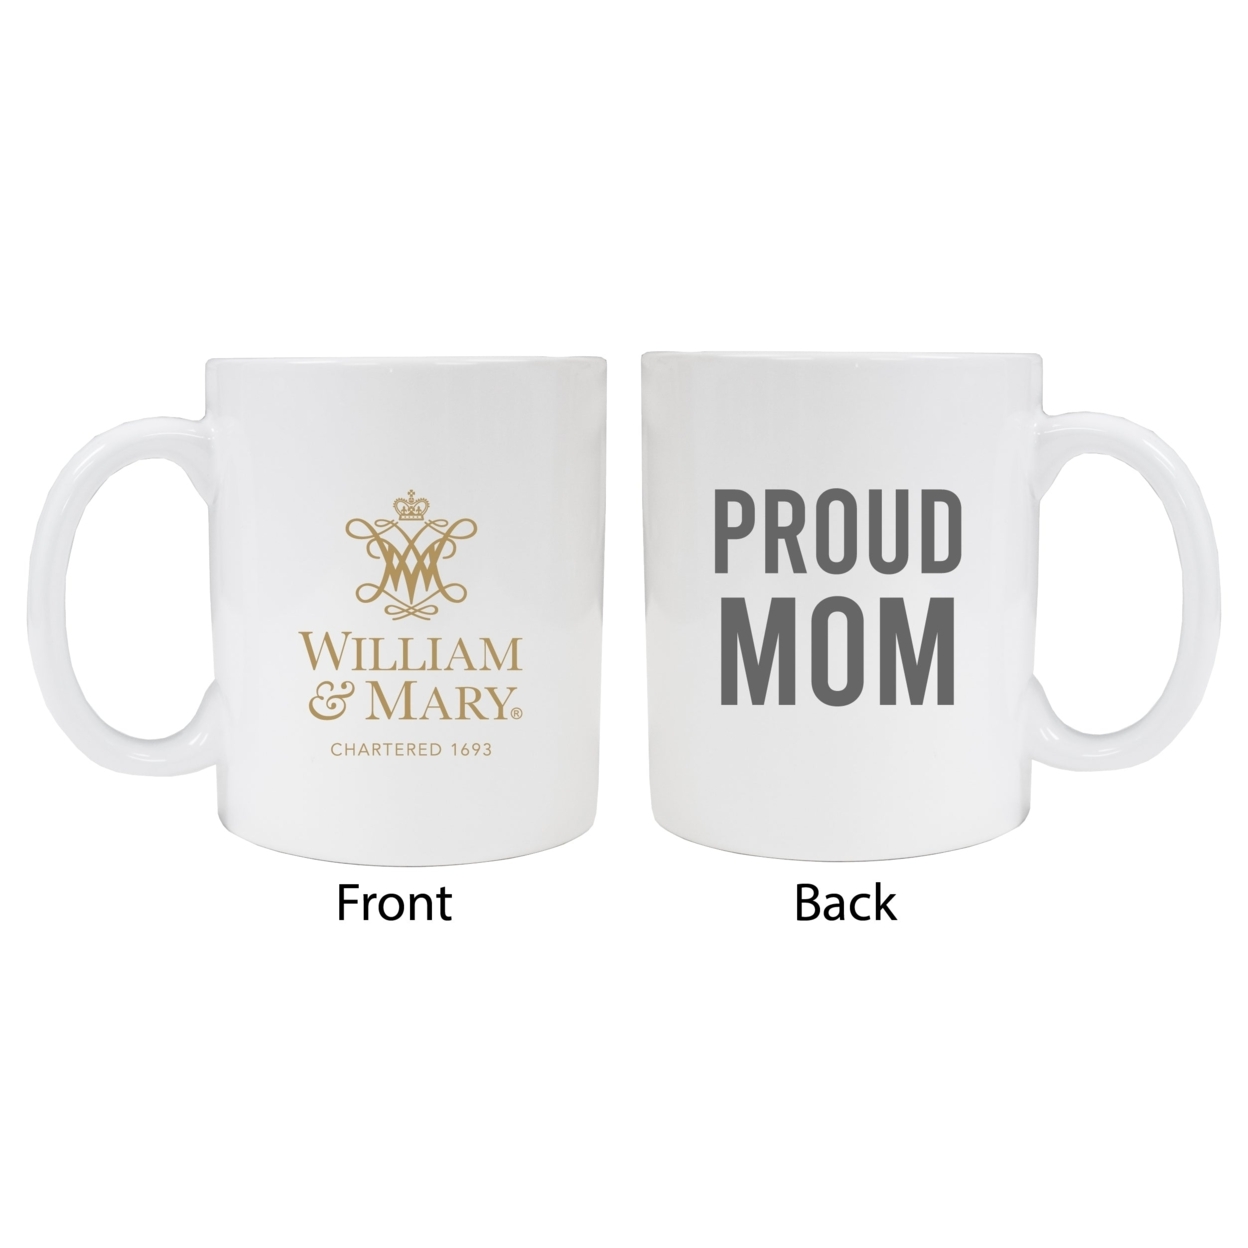 William And Mary Proud Mom Ceramic Coffee Mug - White